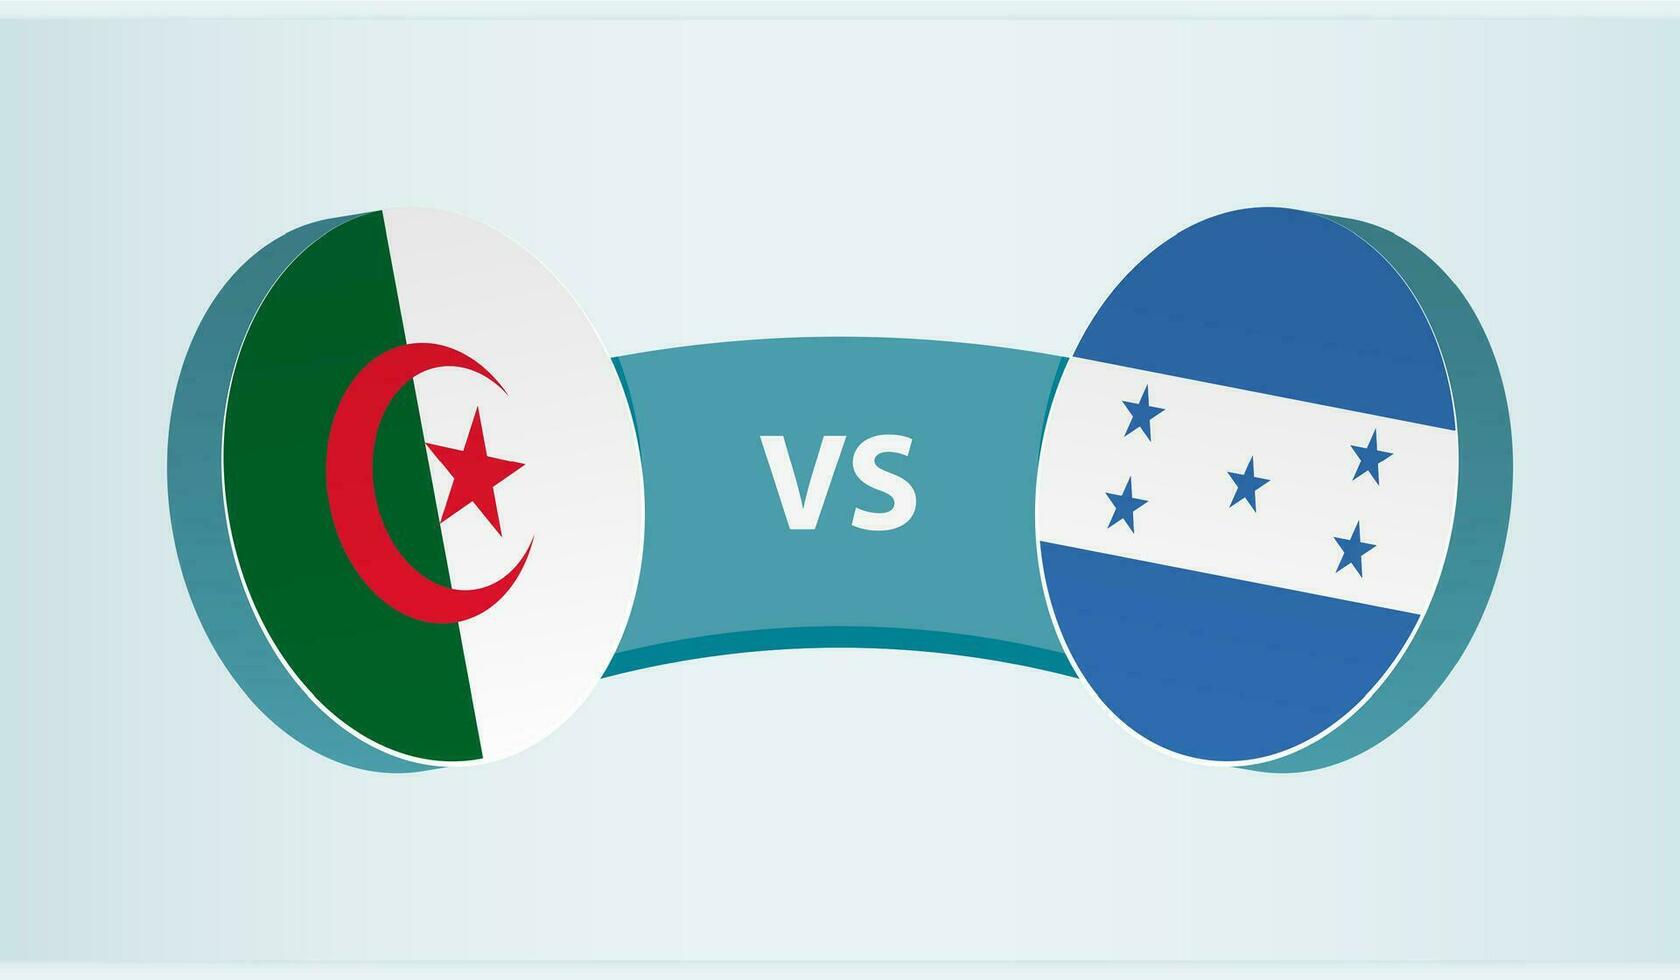 Algeria versus Honduras, team sports competition concept. vector